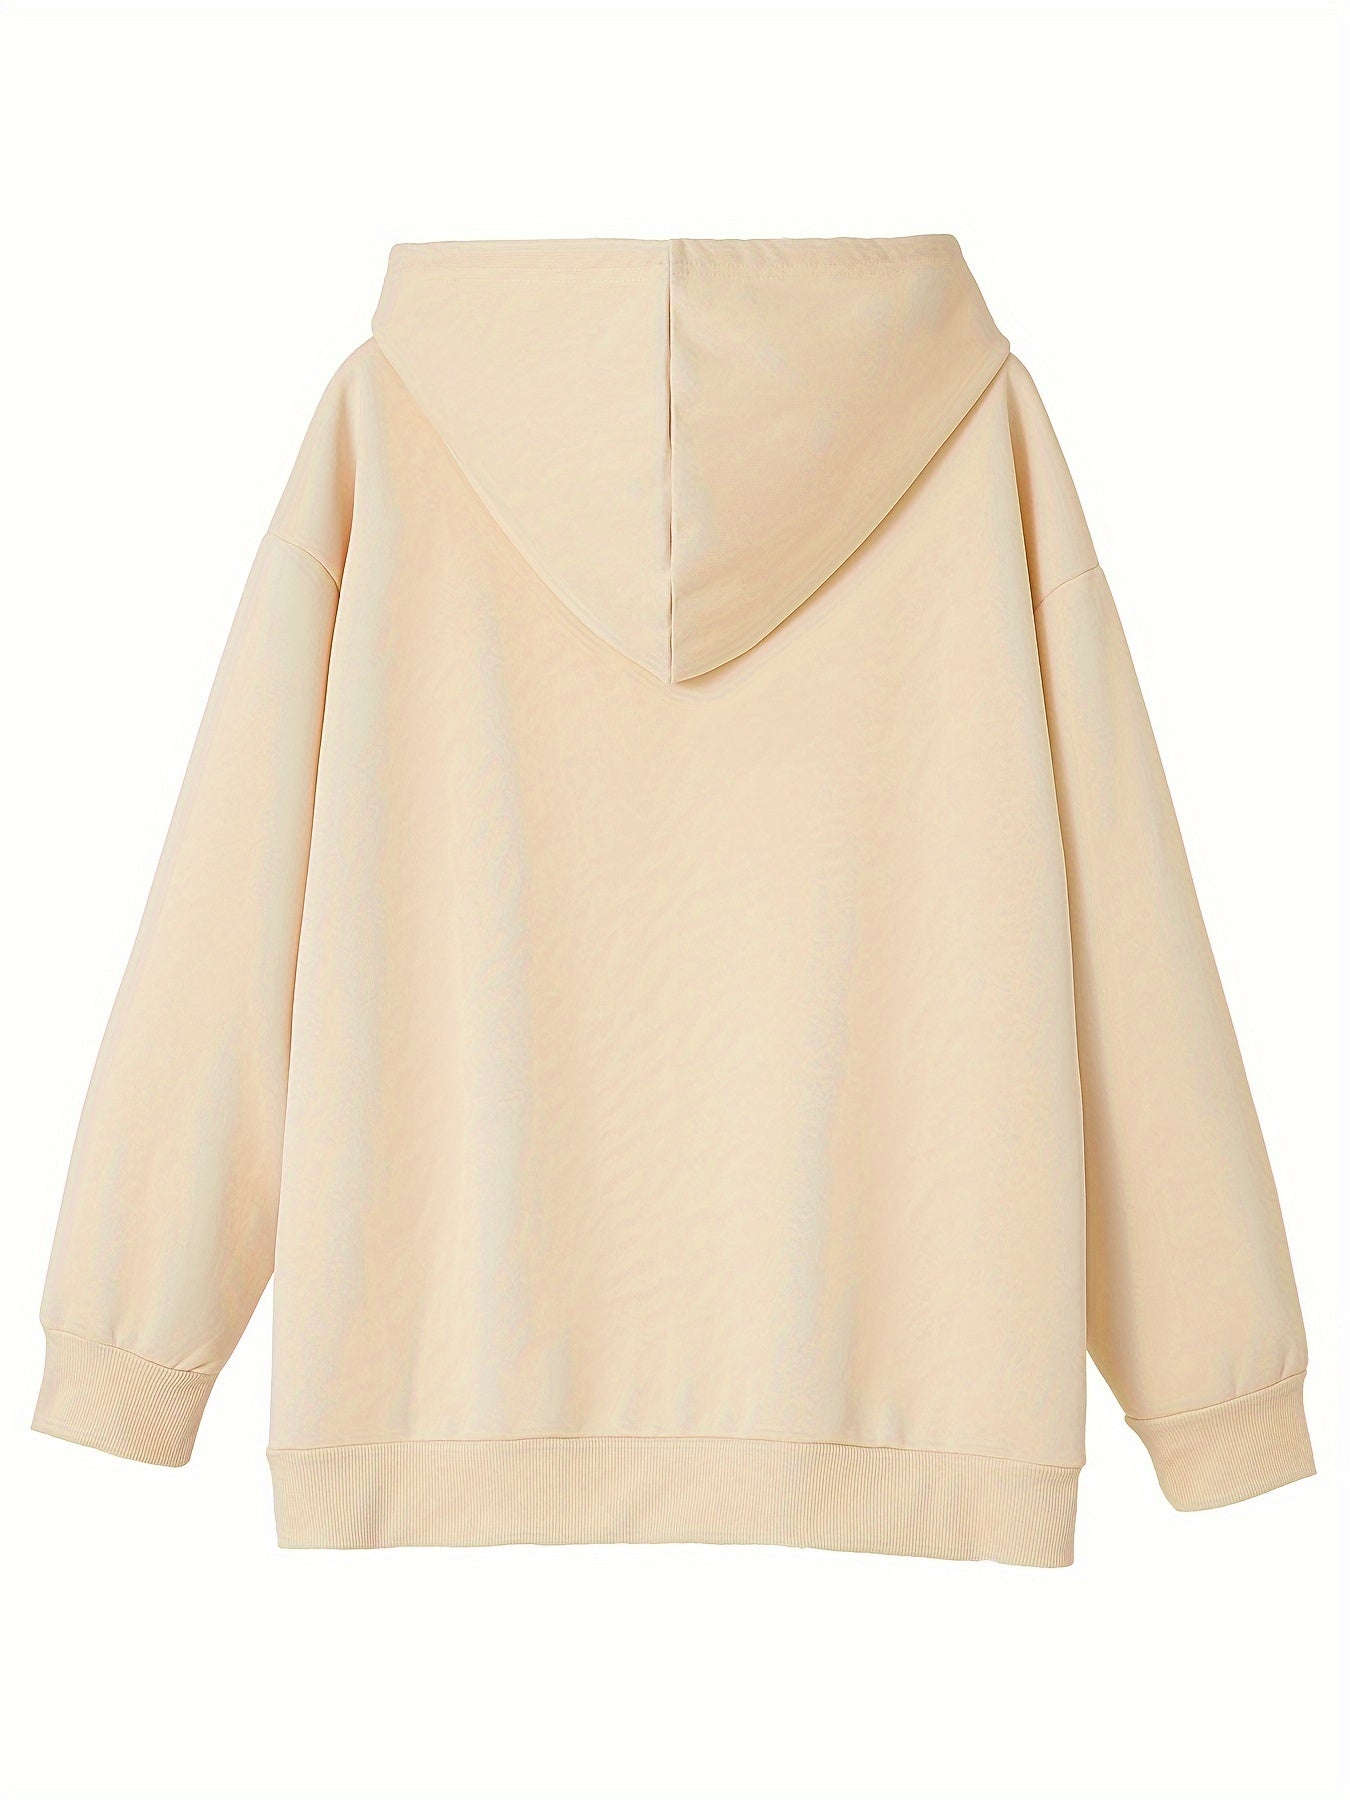 Plus Size Casual Sweatshirt, Women's Plus Slogan & Heart Print Fleece Liner Long Sleeve Drawstring Hooded Sweatshirt With Pockets claimedbygoddesigns